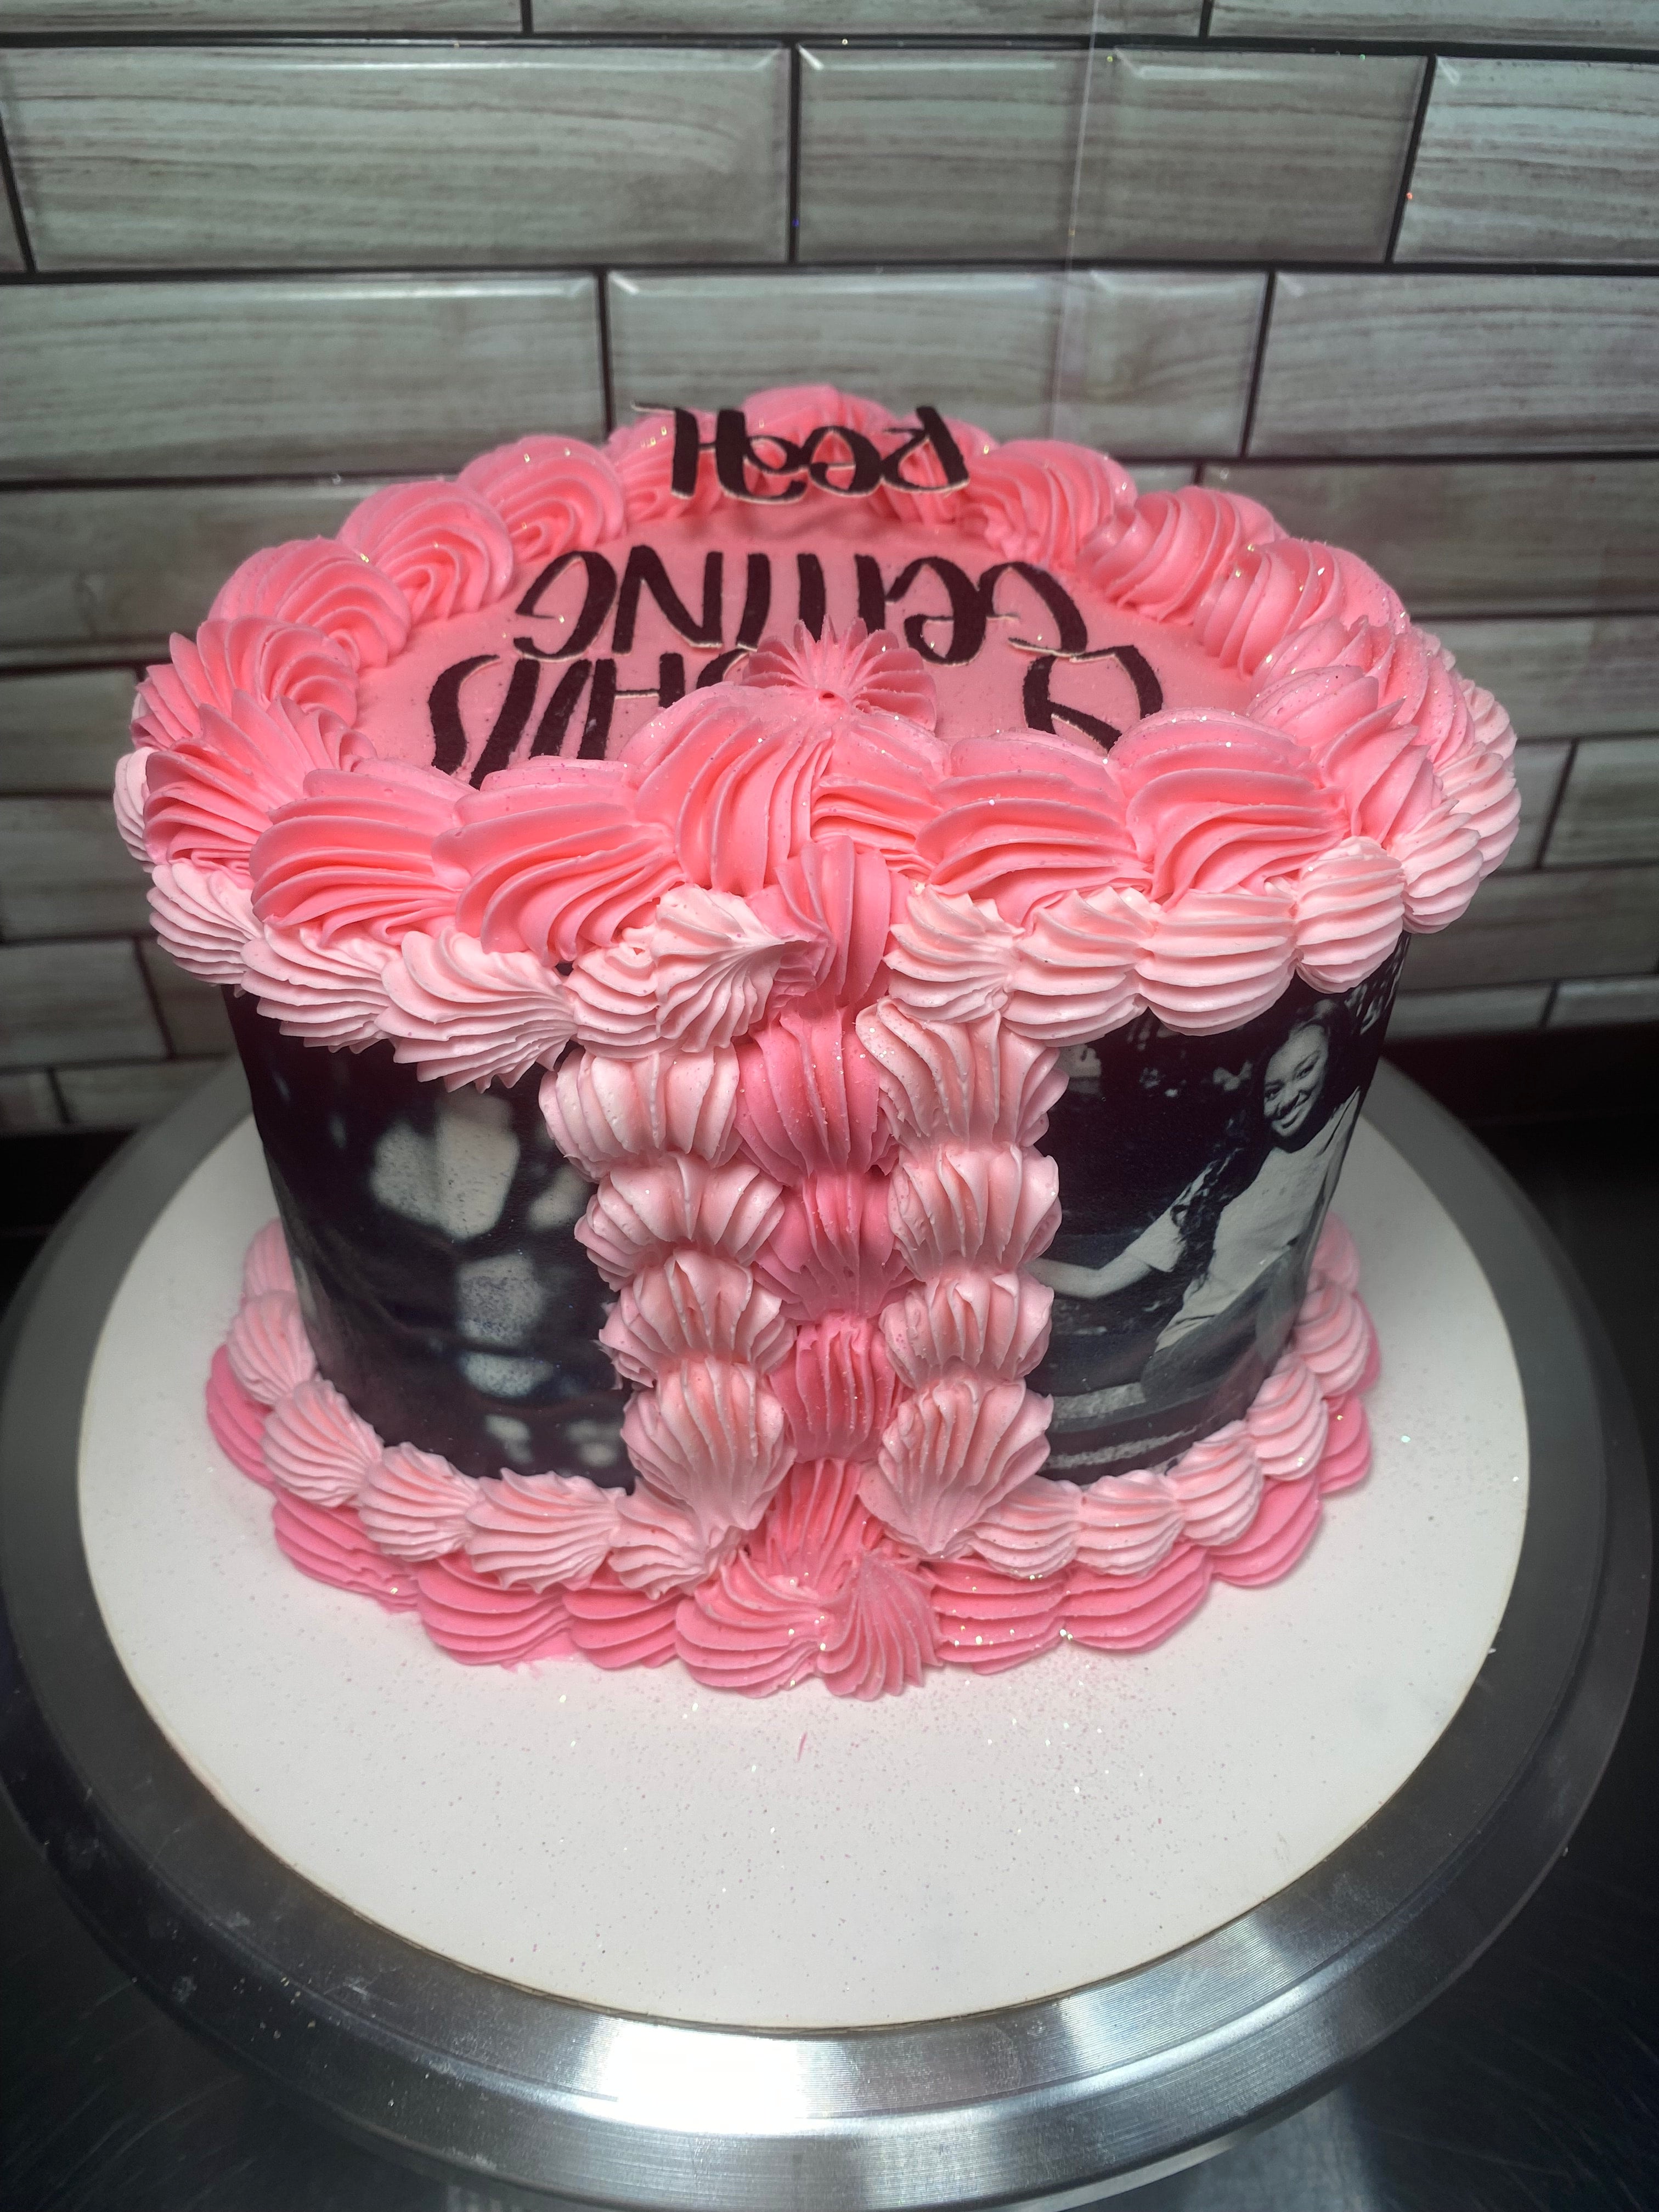 Tasty Creations - Scorpion Cake #durango 🇲🇽 | Facebook